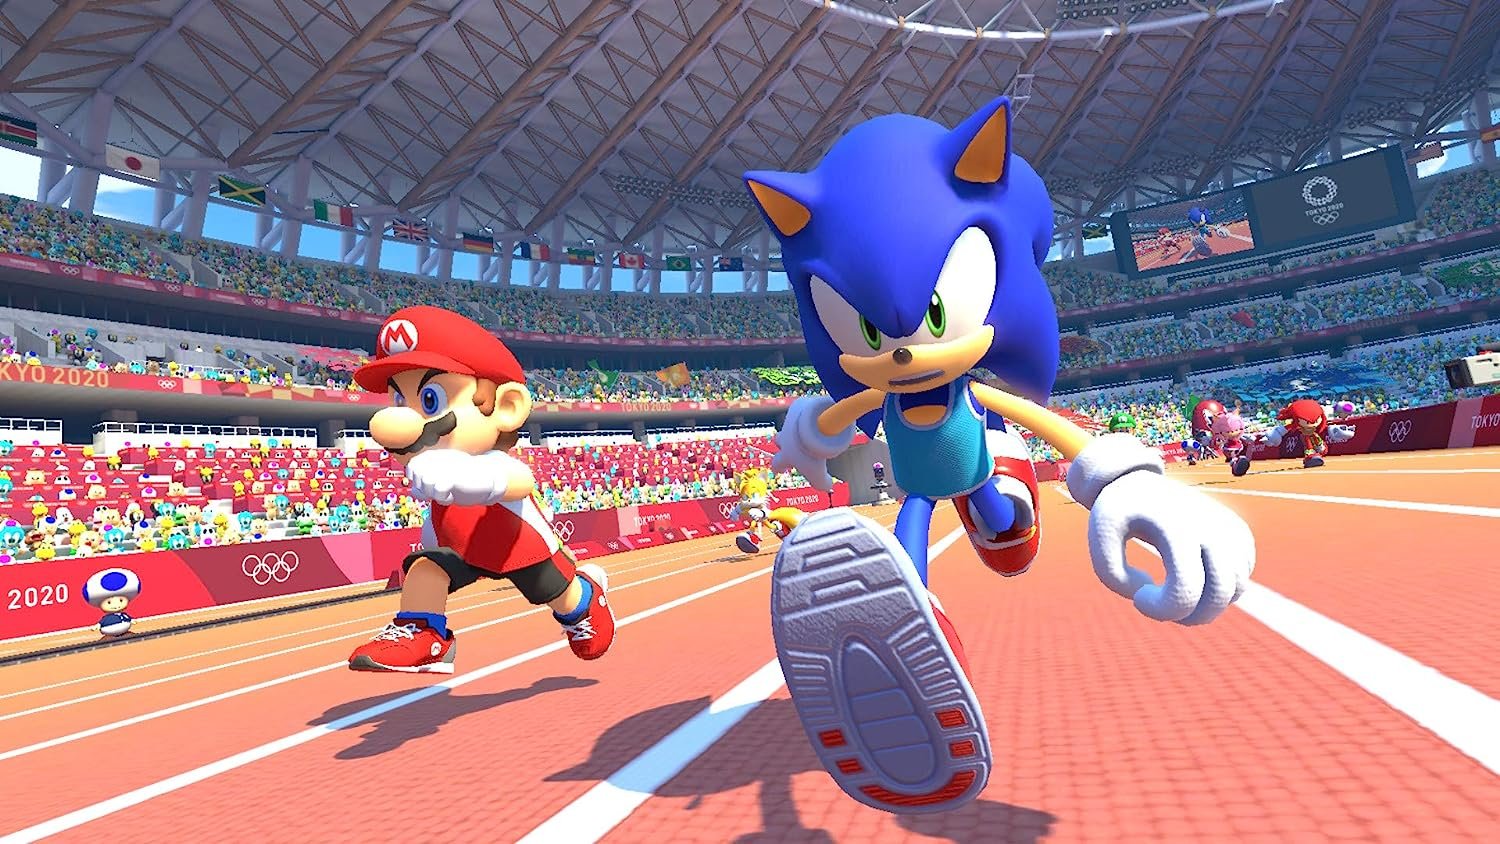 Mario & Sonic at the Olympic GamesTokyo 2020 - Nintendo Switch